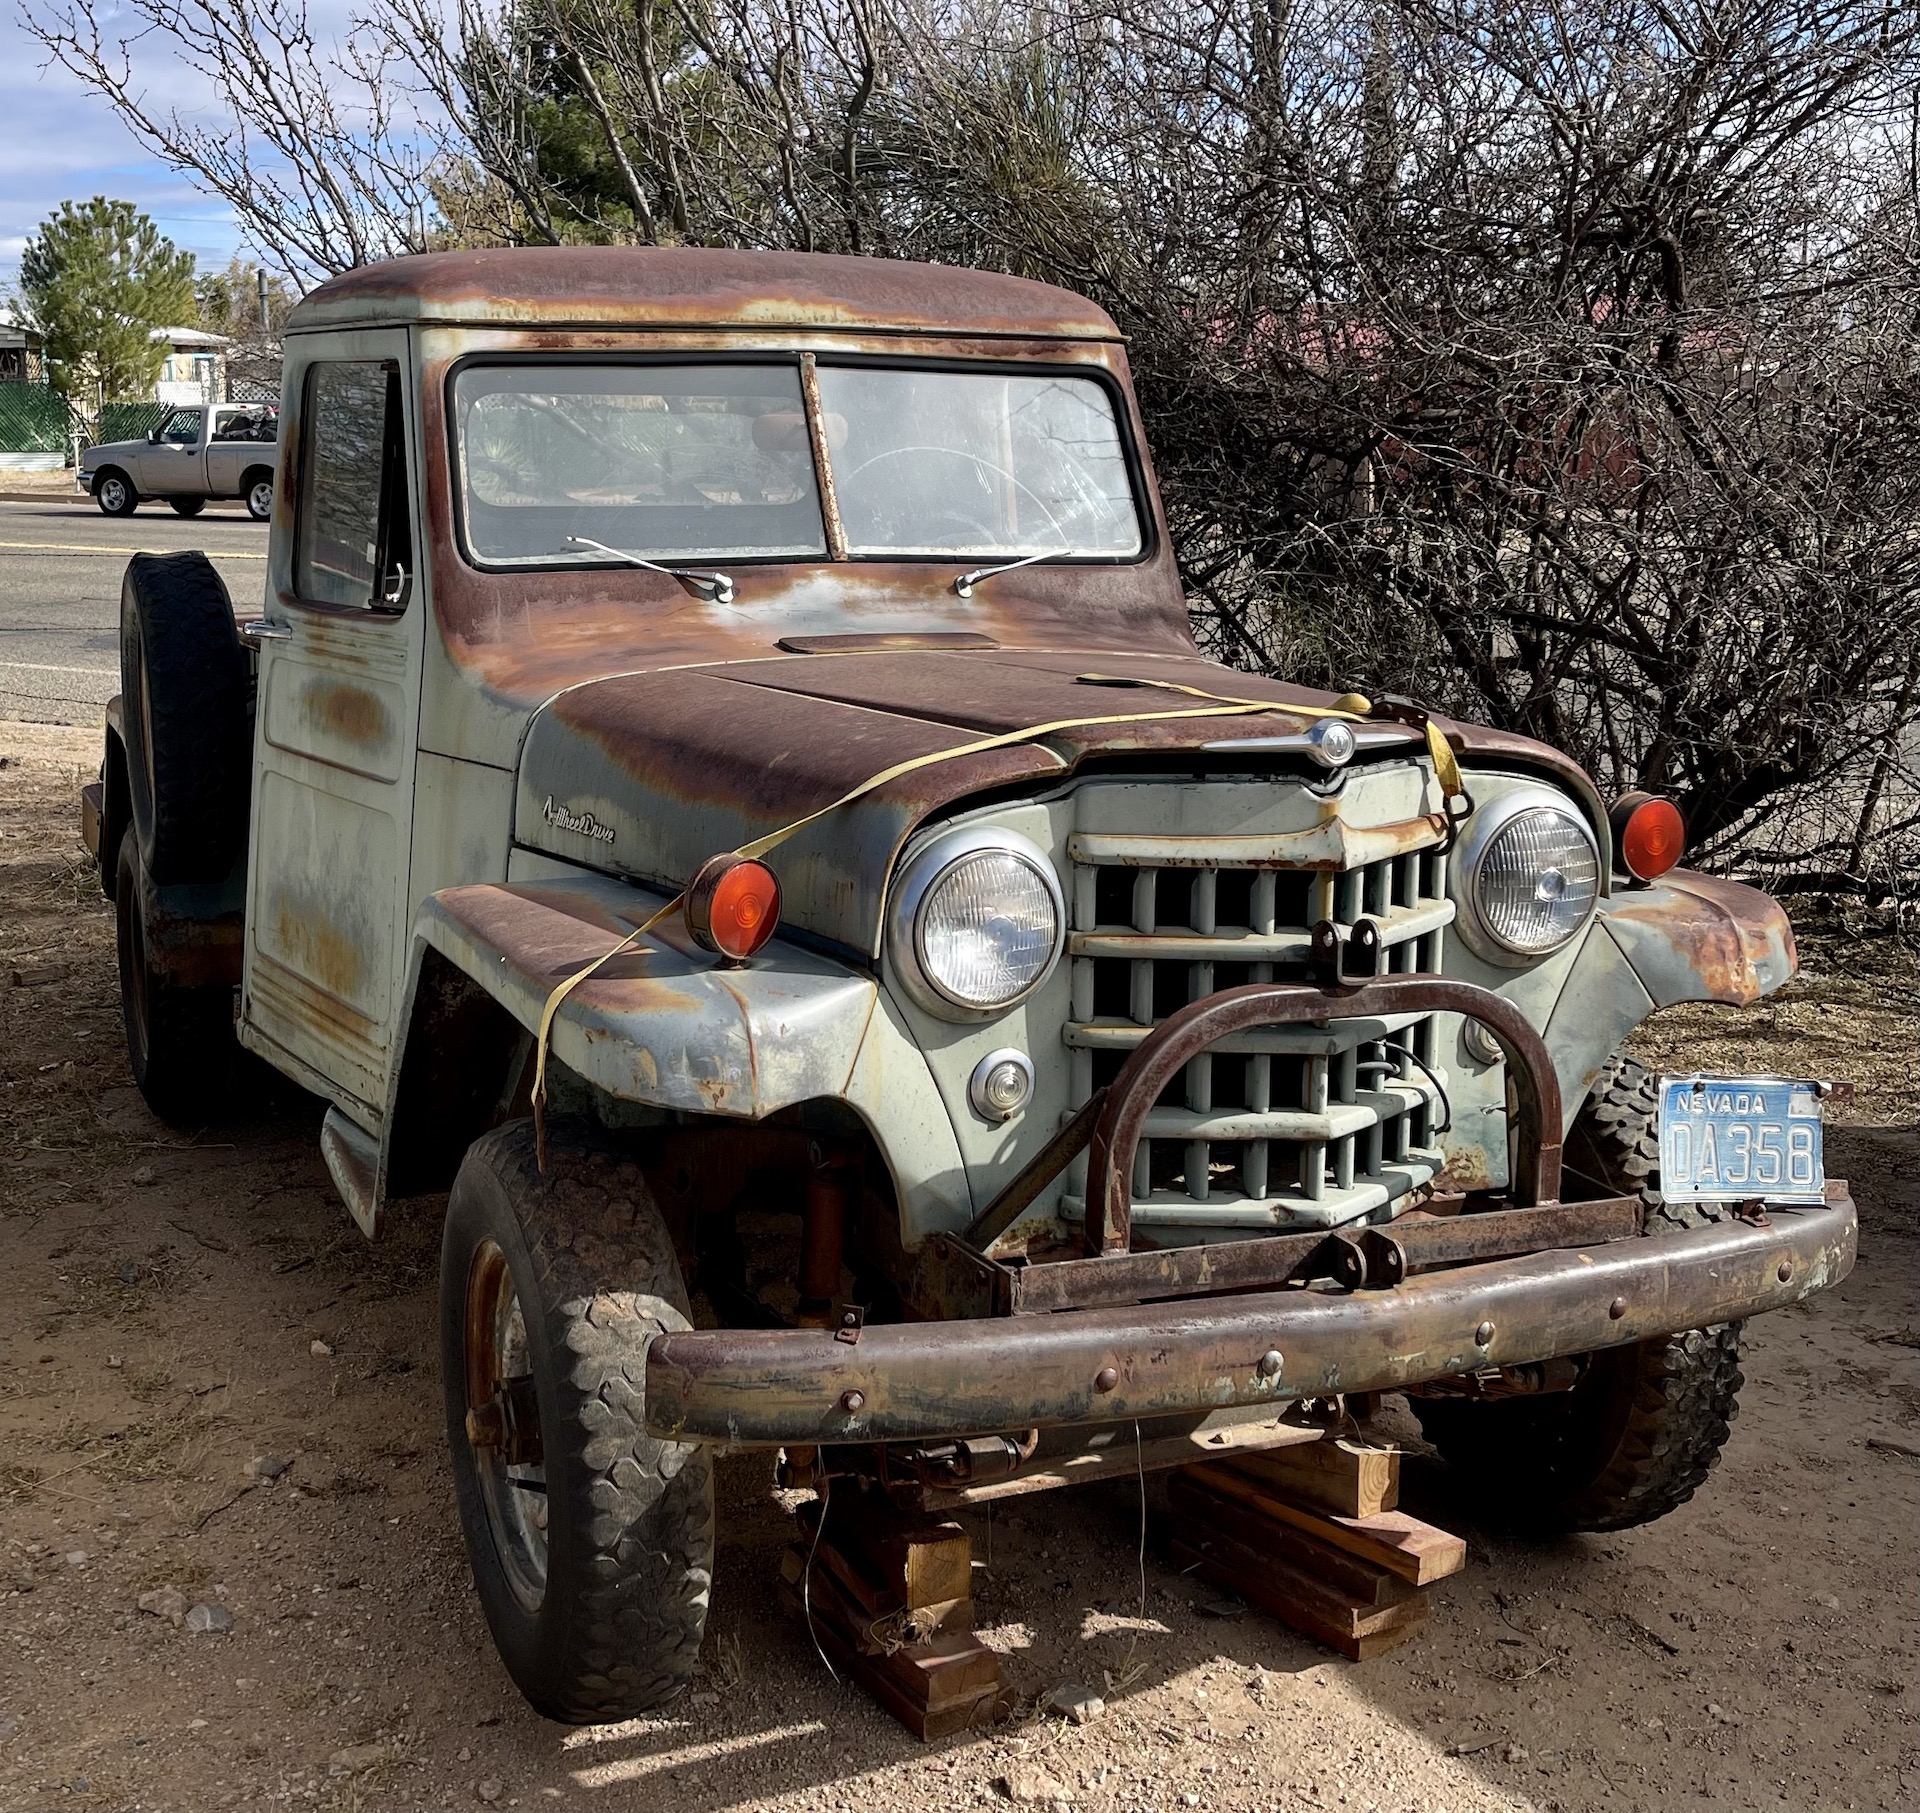 Old Rusty Jeep - Life Insurance | Sierra Vista, AZ - Pitt’s Insurance Place